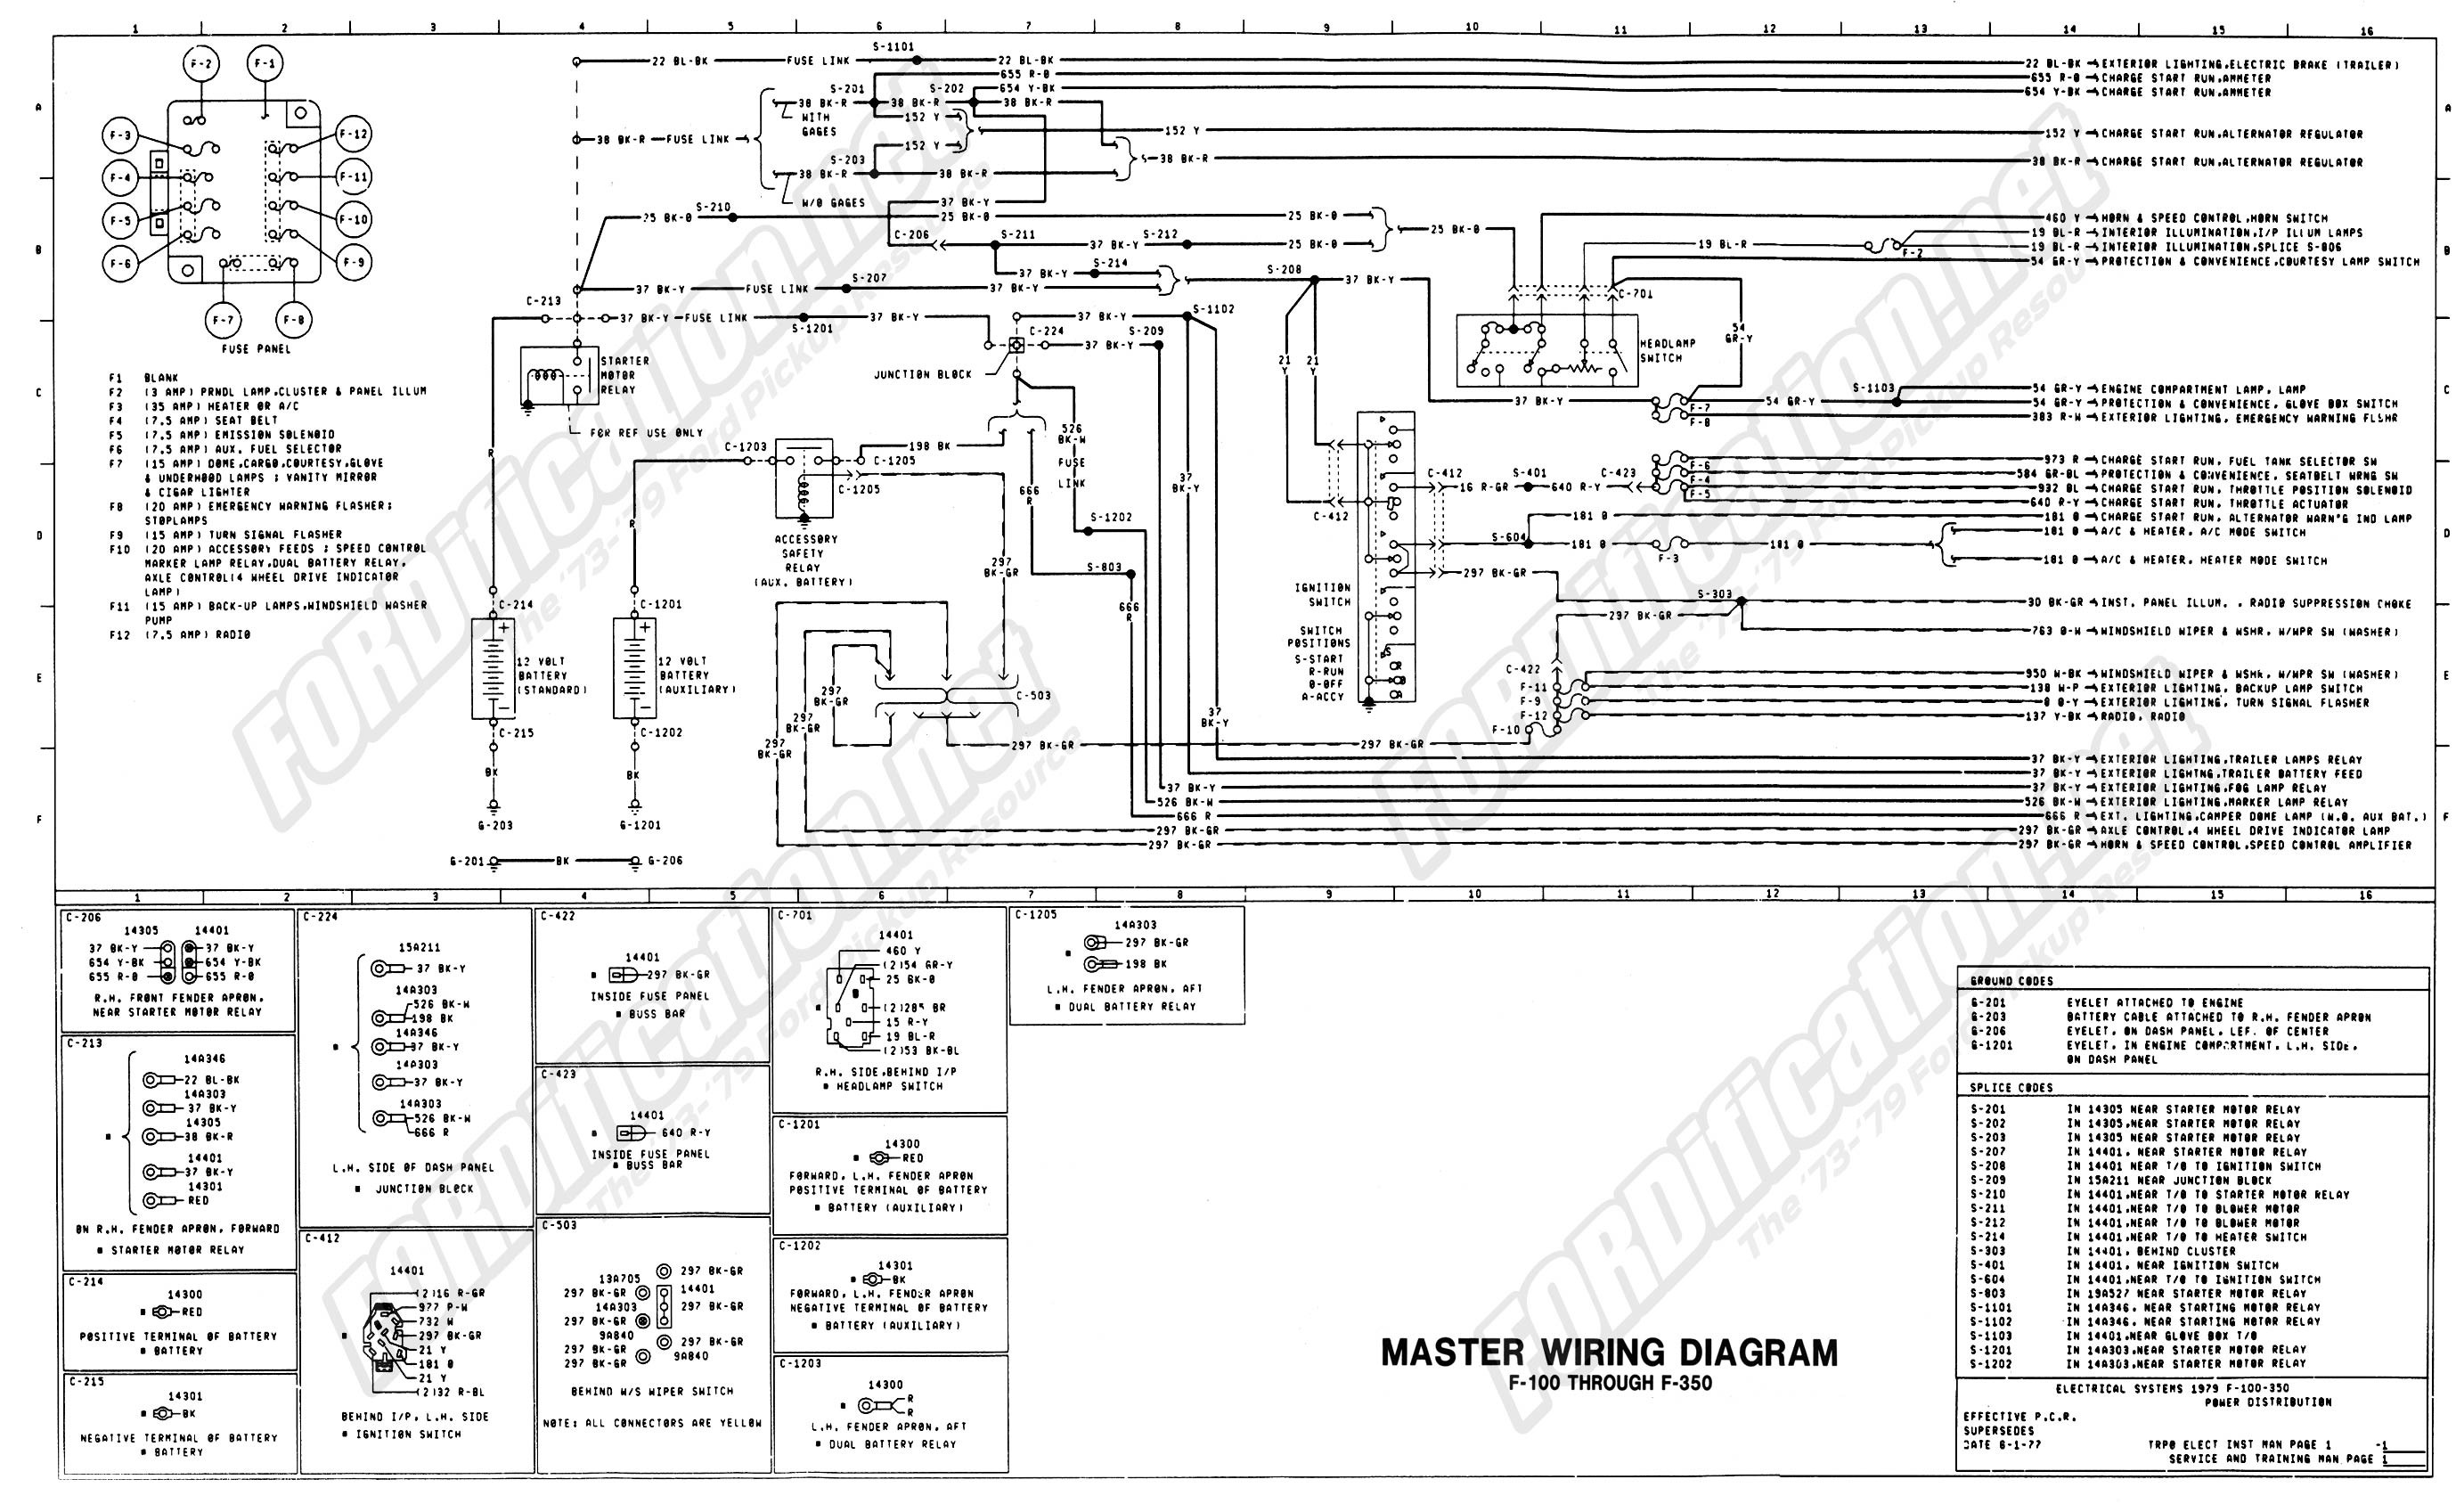 1999 ford Ranger Engine Diagram 700 76 ford Ltd Ignition Wiring Diagram Of 1999 ford Ranger Engine Diagram